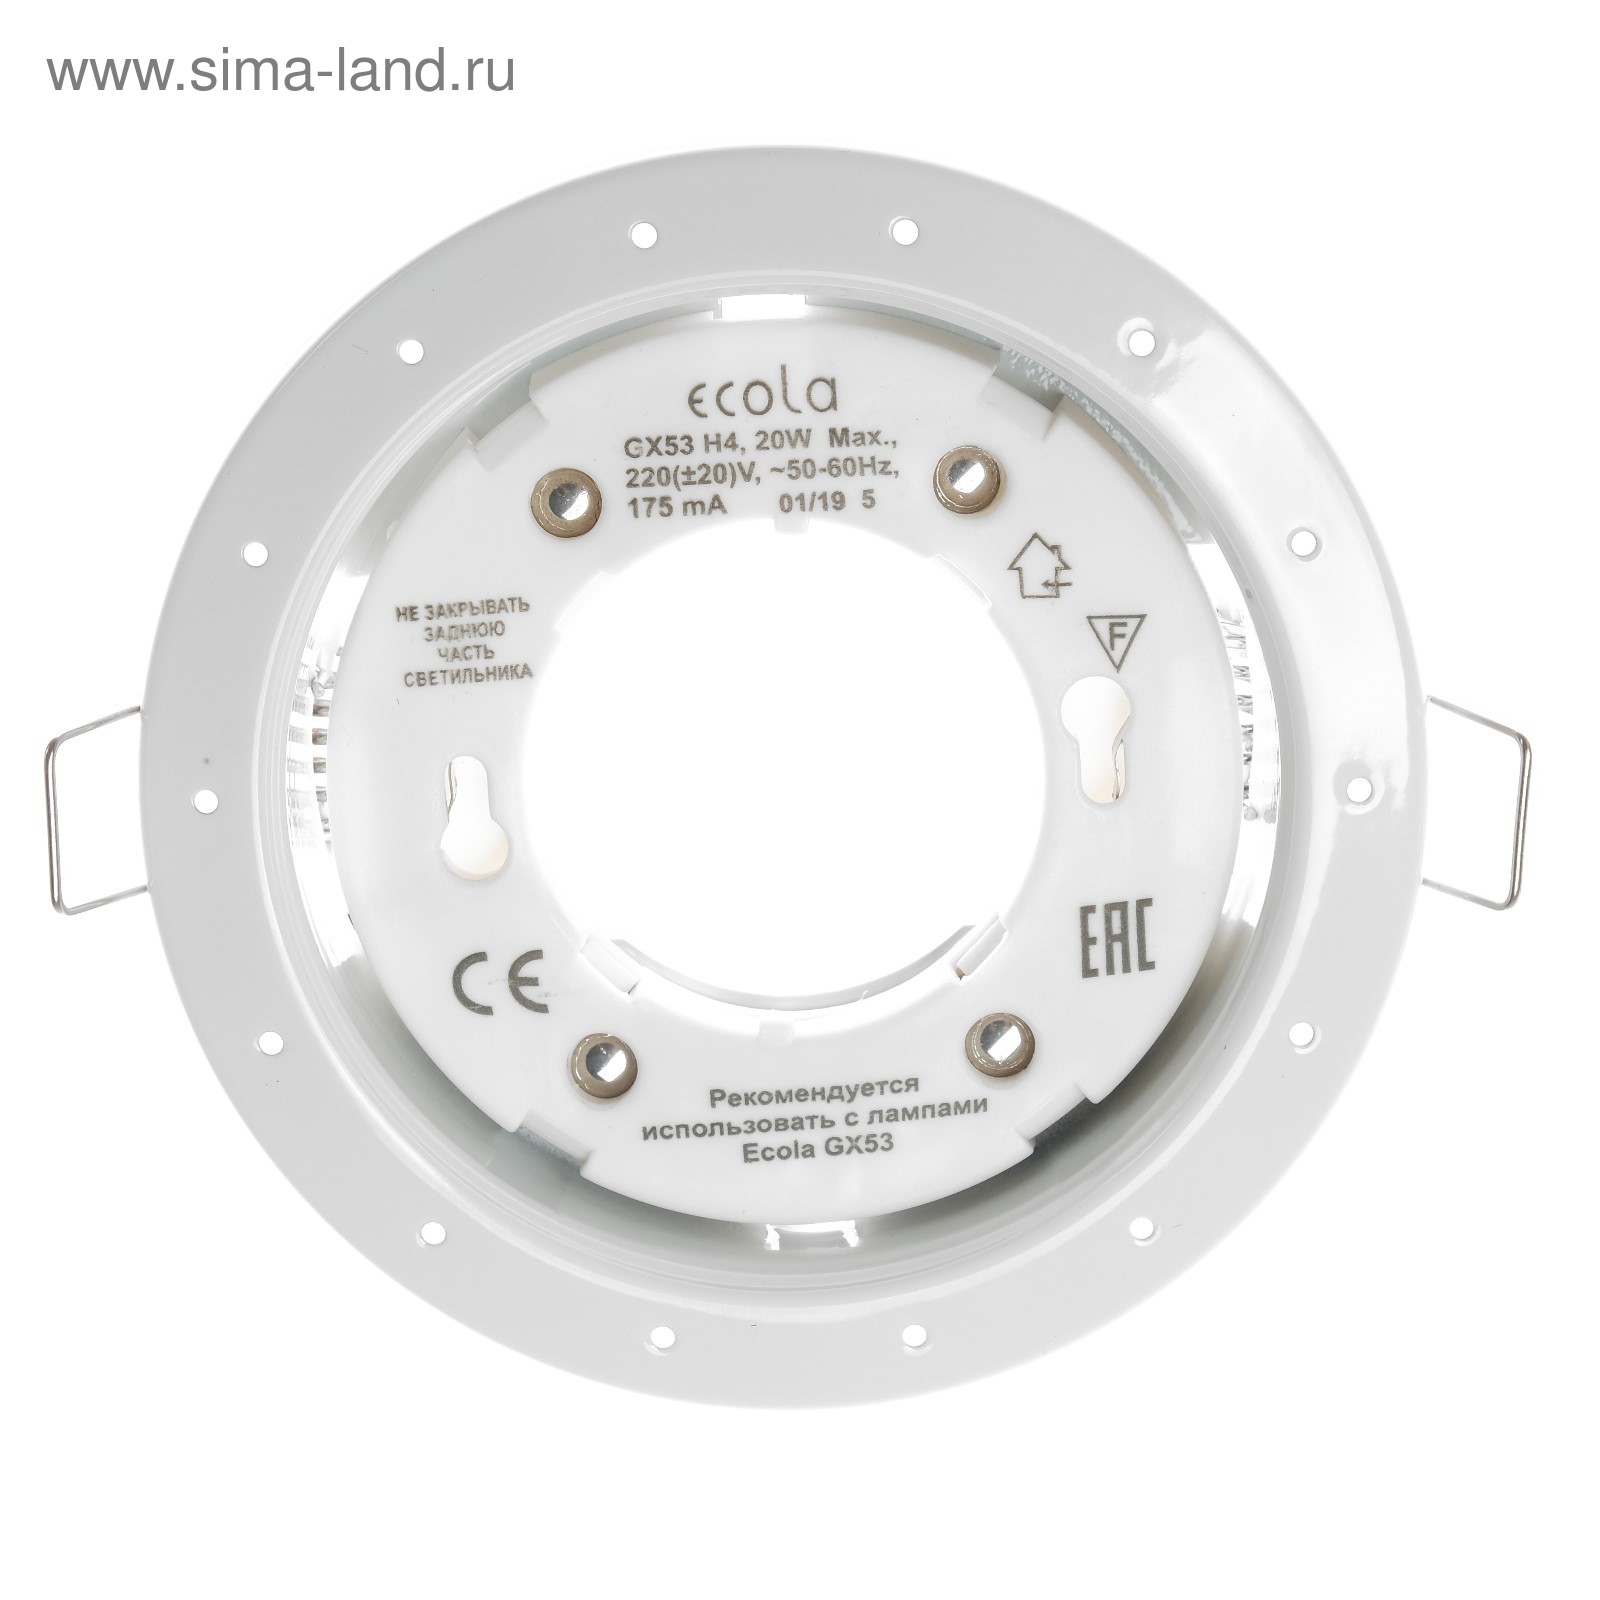 Светильник Ecola gx53 диаметр